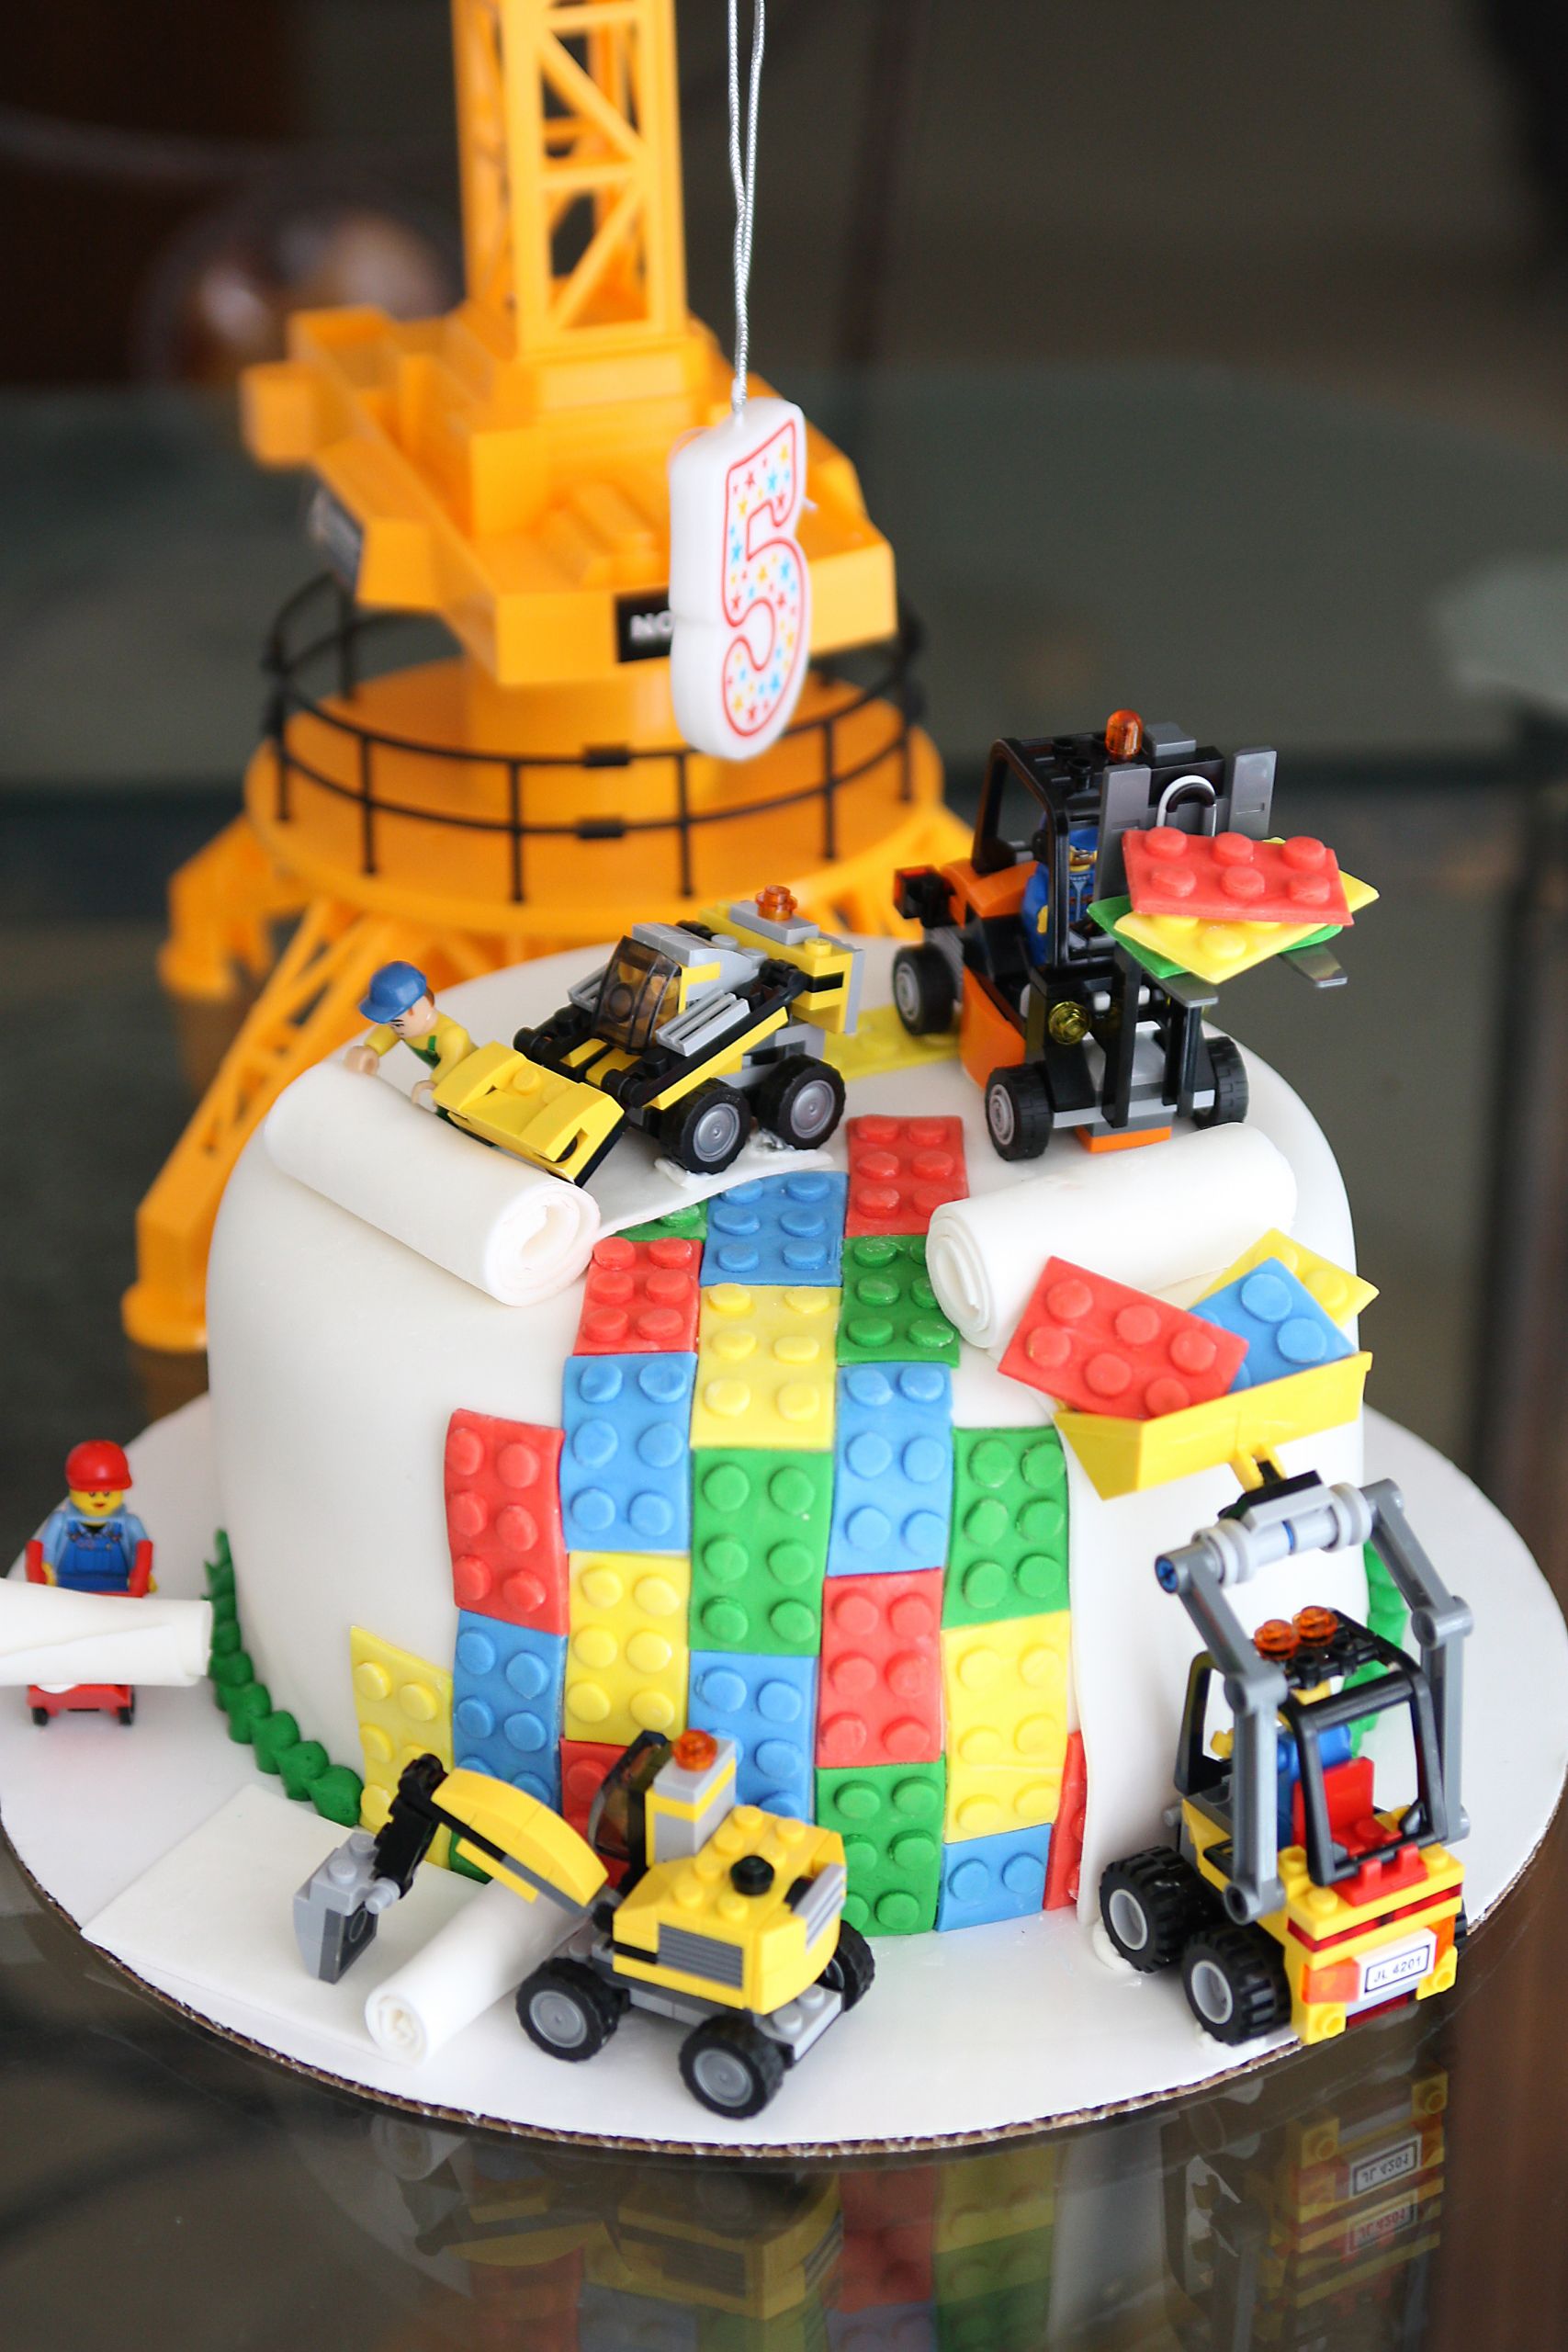 Lego Birthday Cakes
 An Amazing Lego Cake My Little Boy is 5 